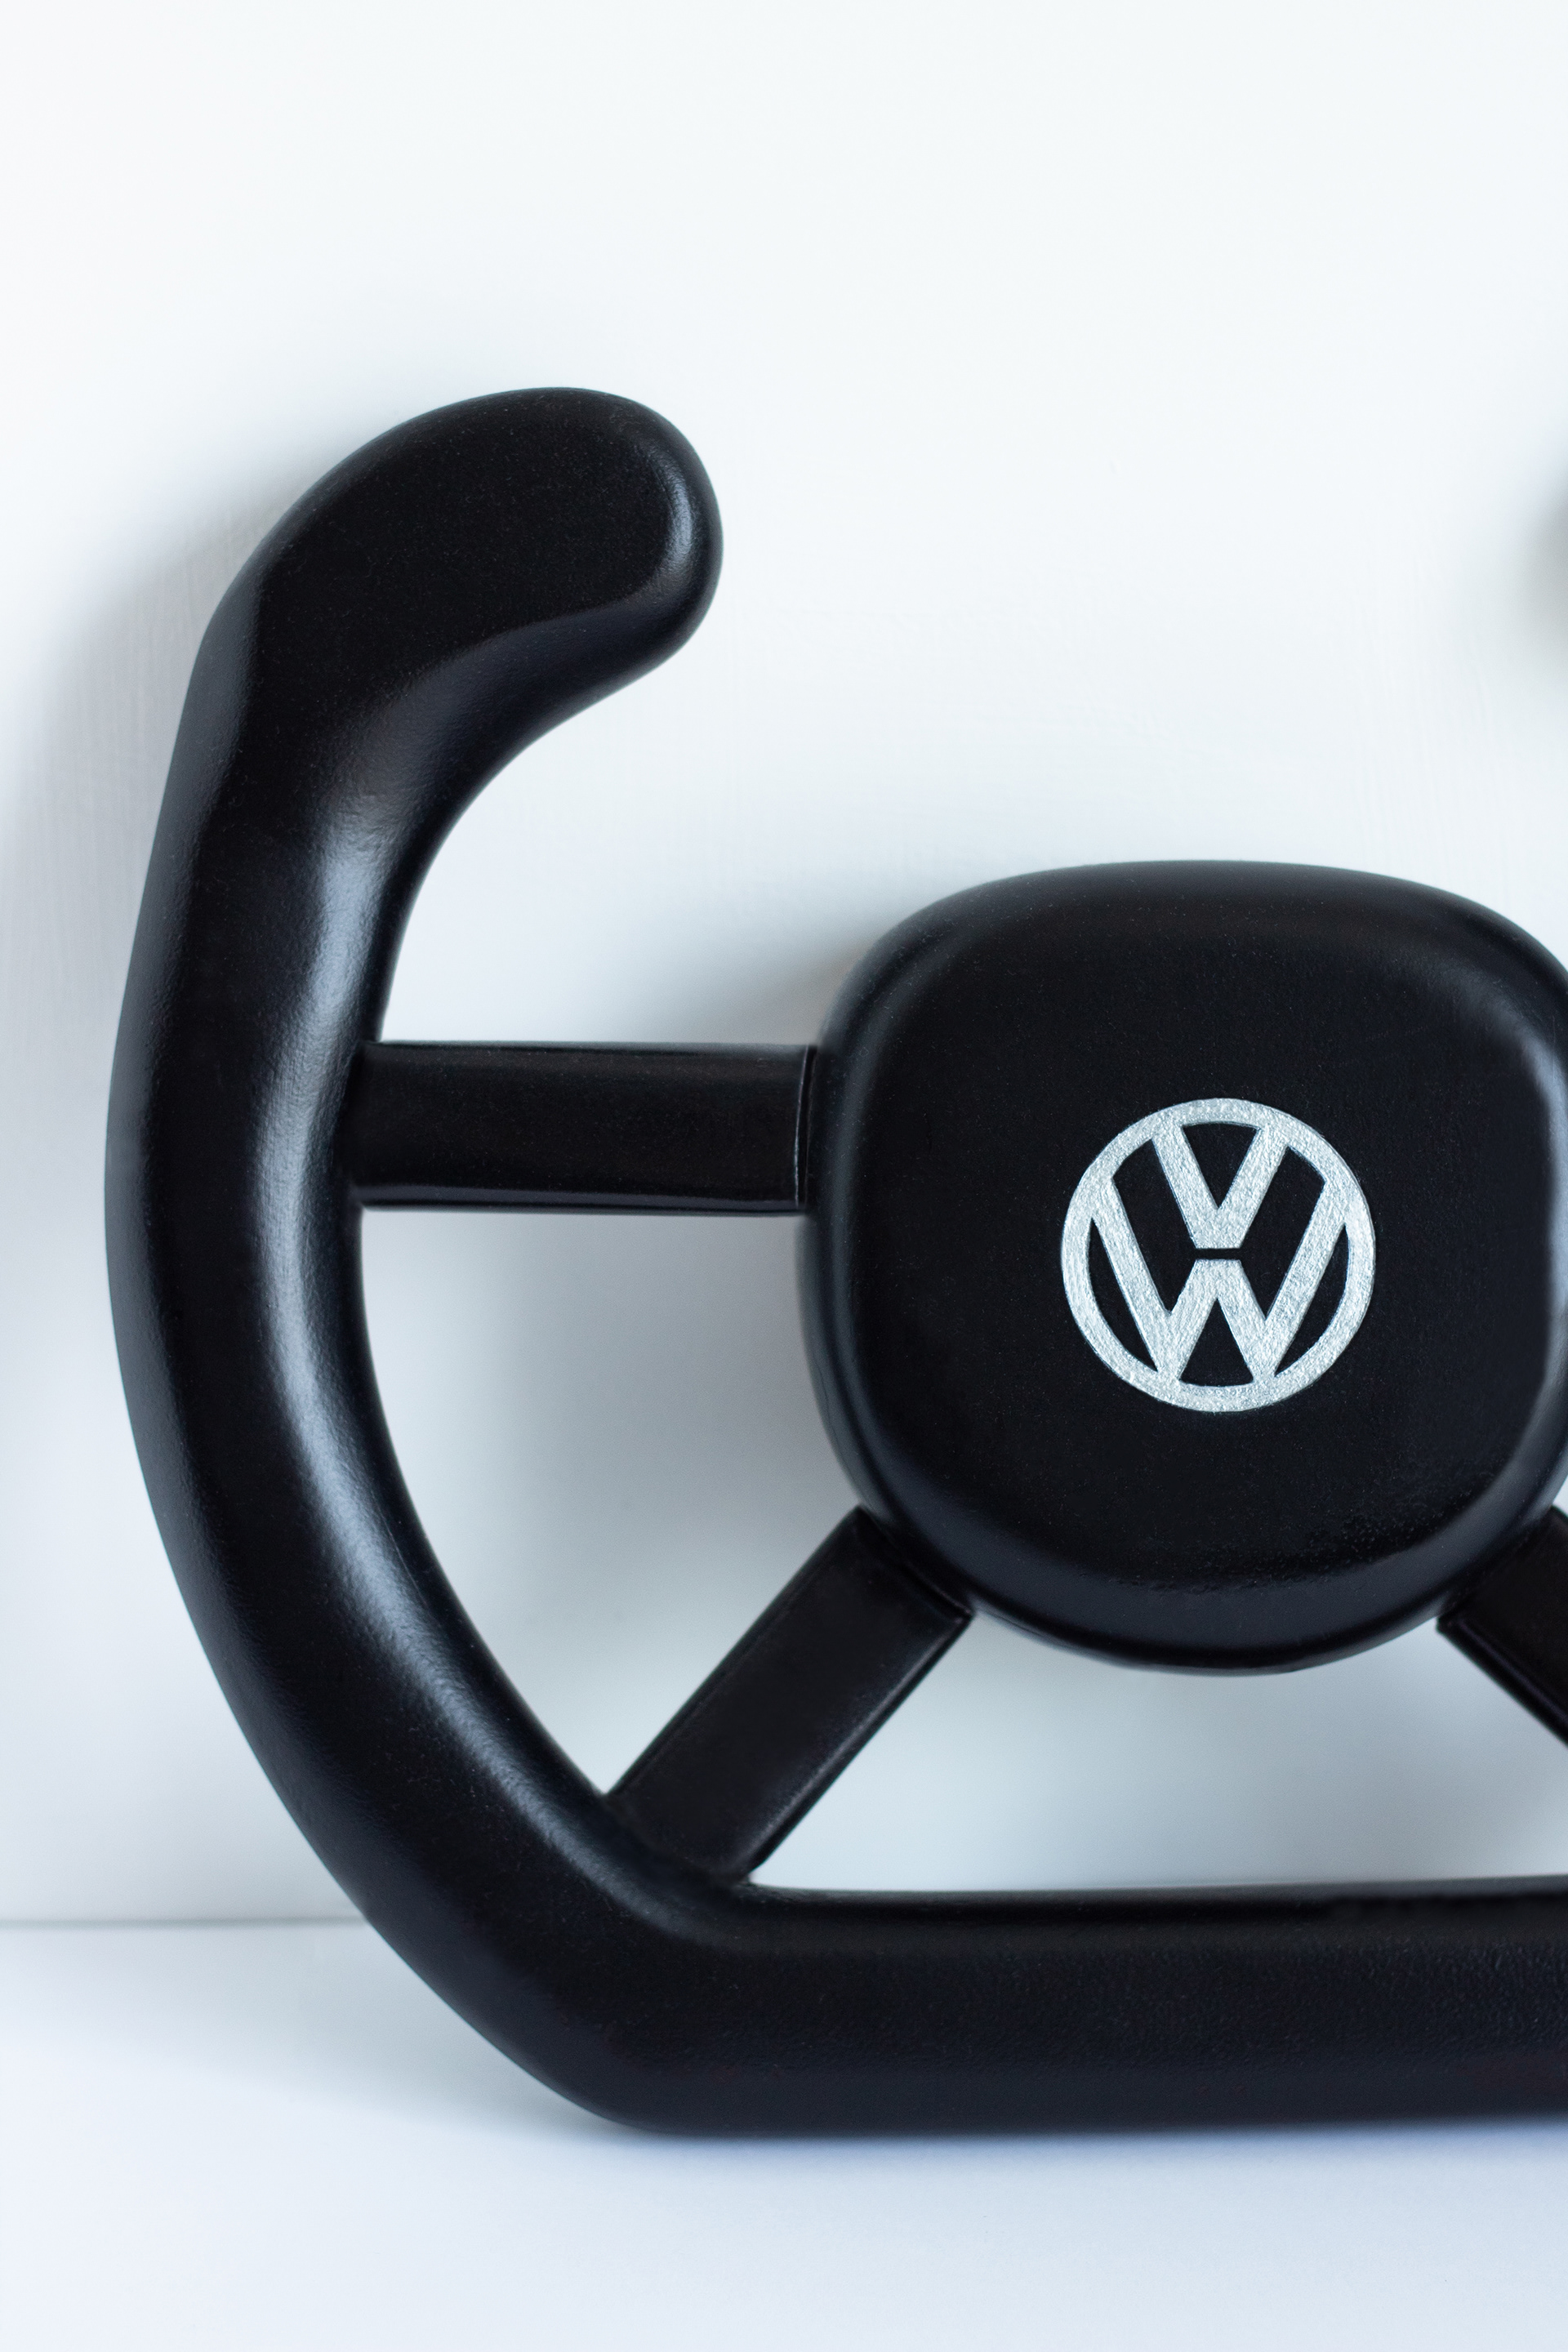 VW Steering Wheel Concept